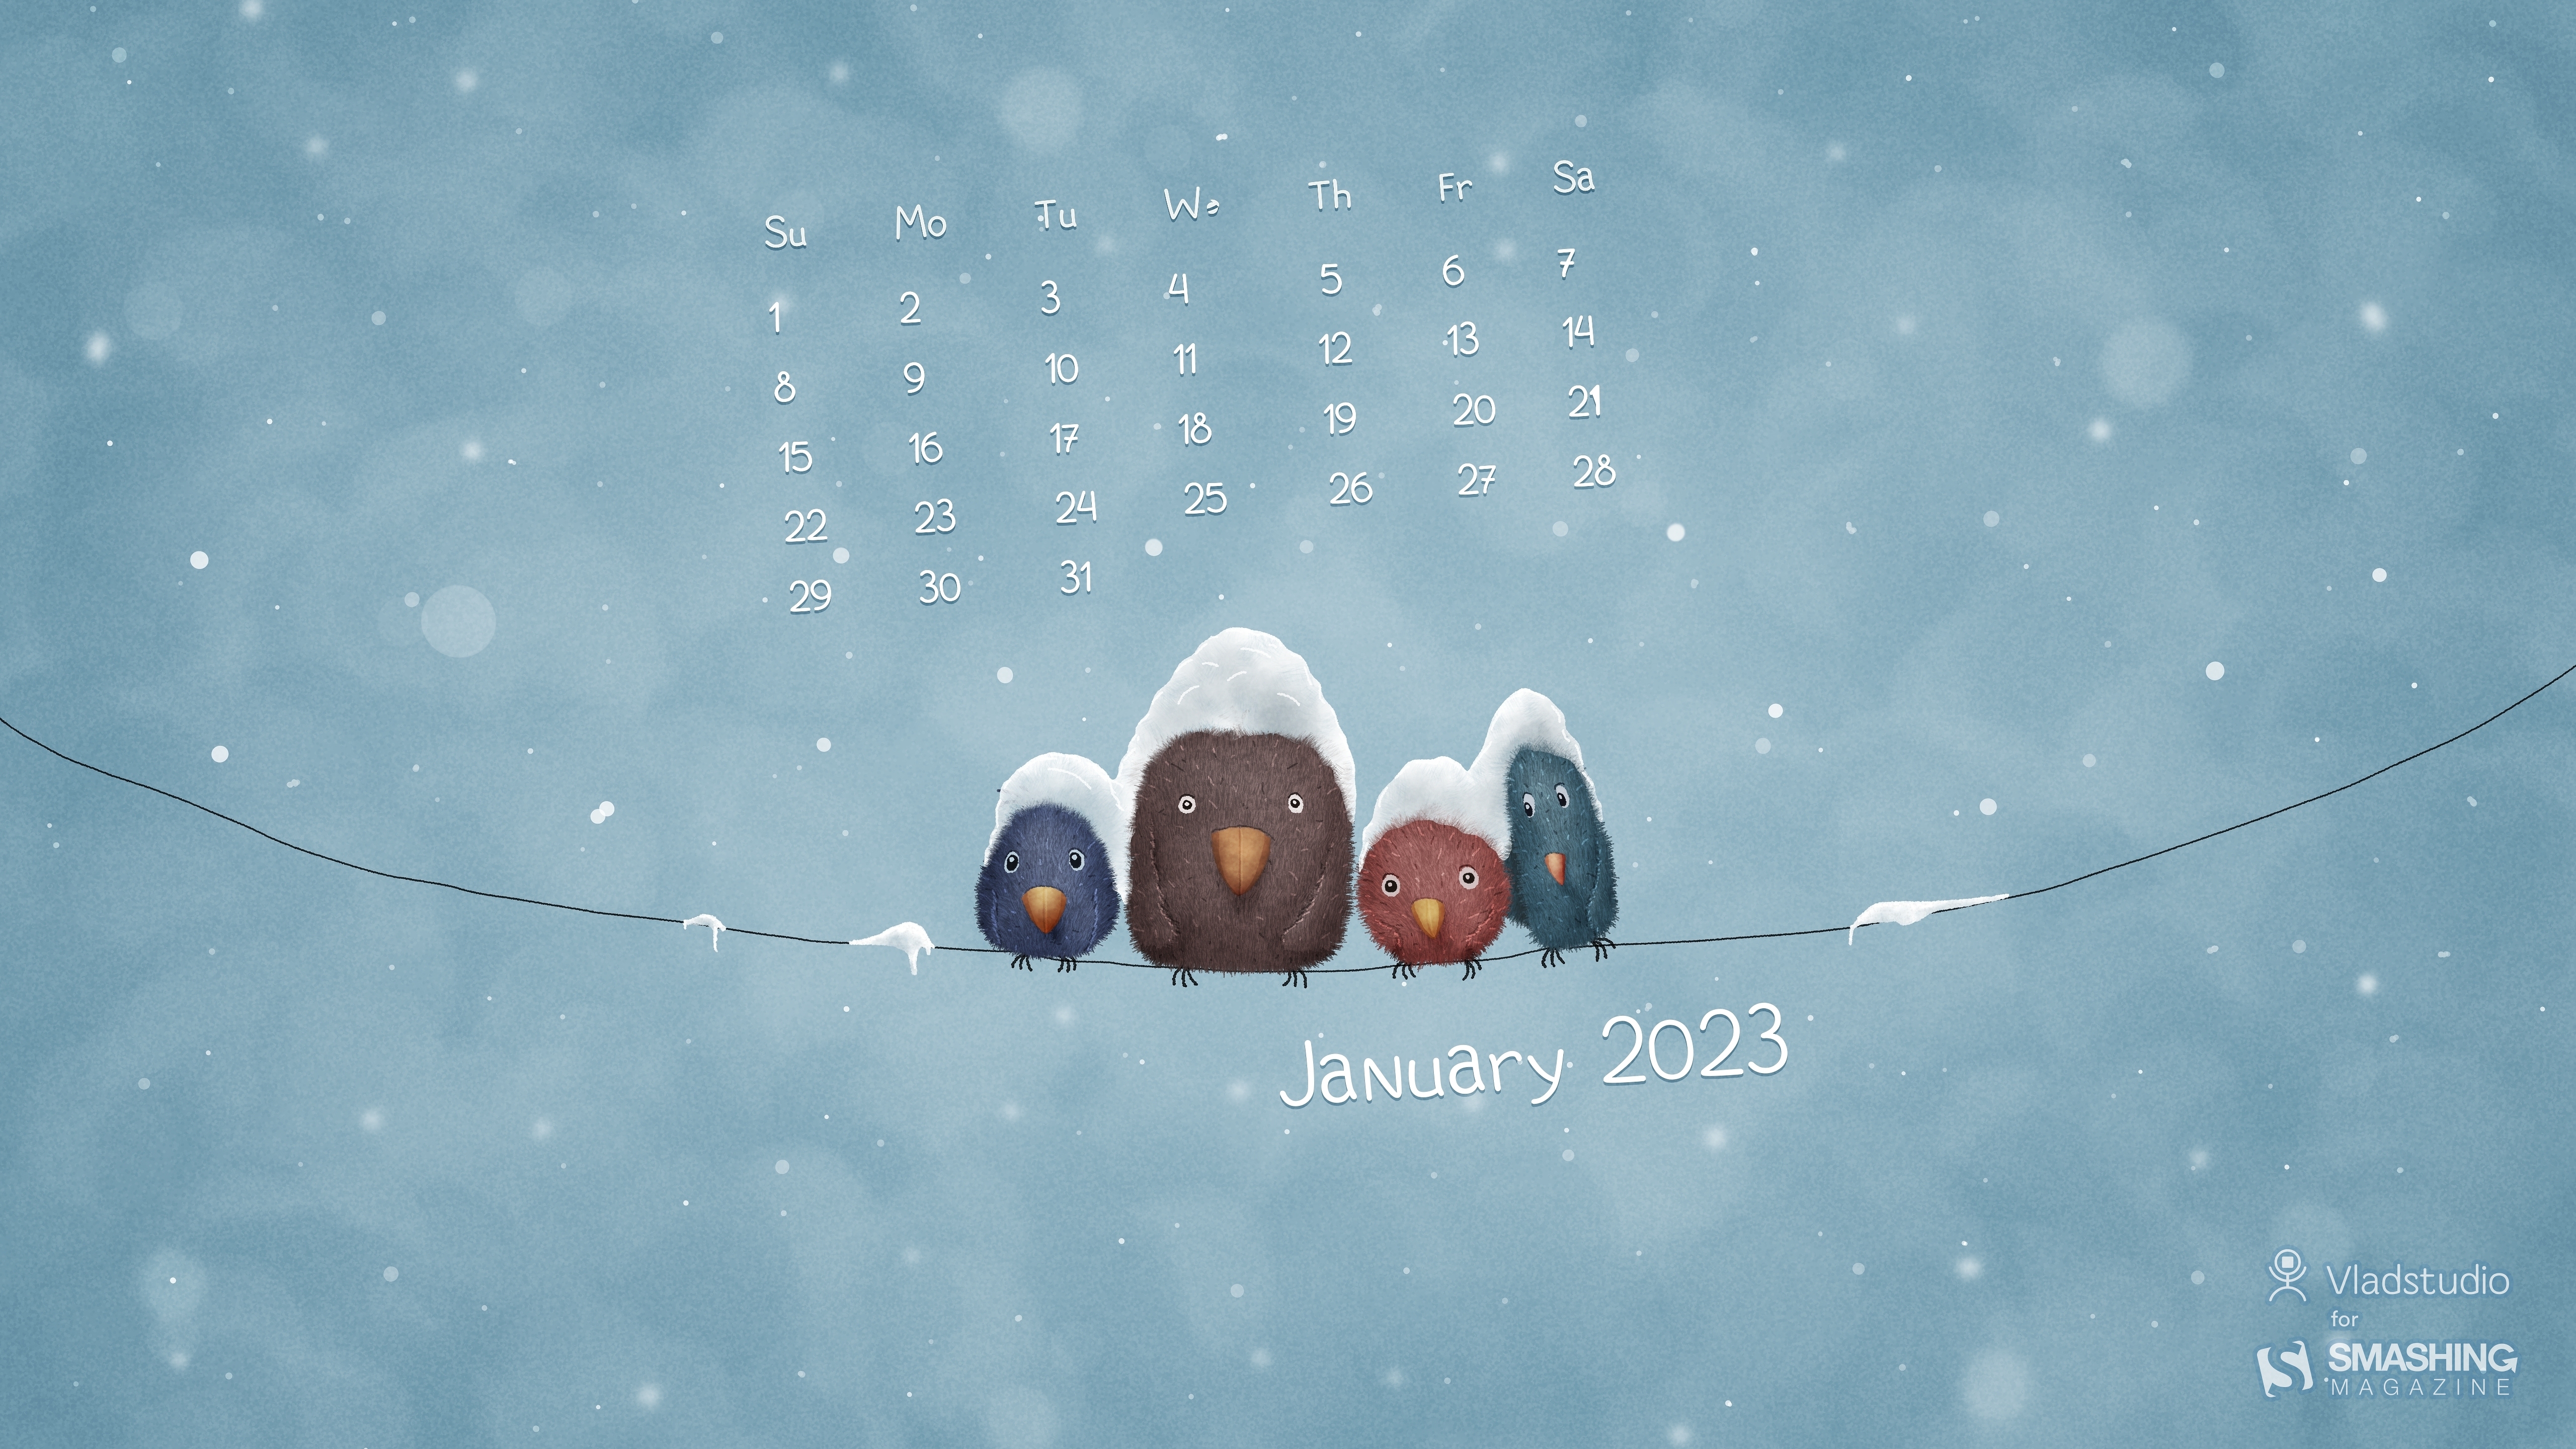 FREE 25 July 2023 Desktop Calendar Wallpapers